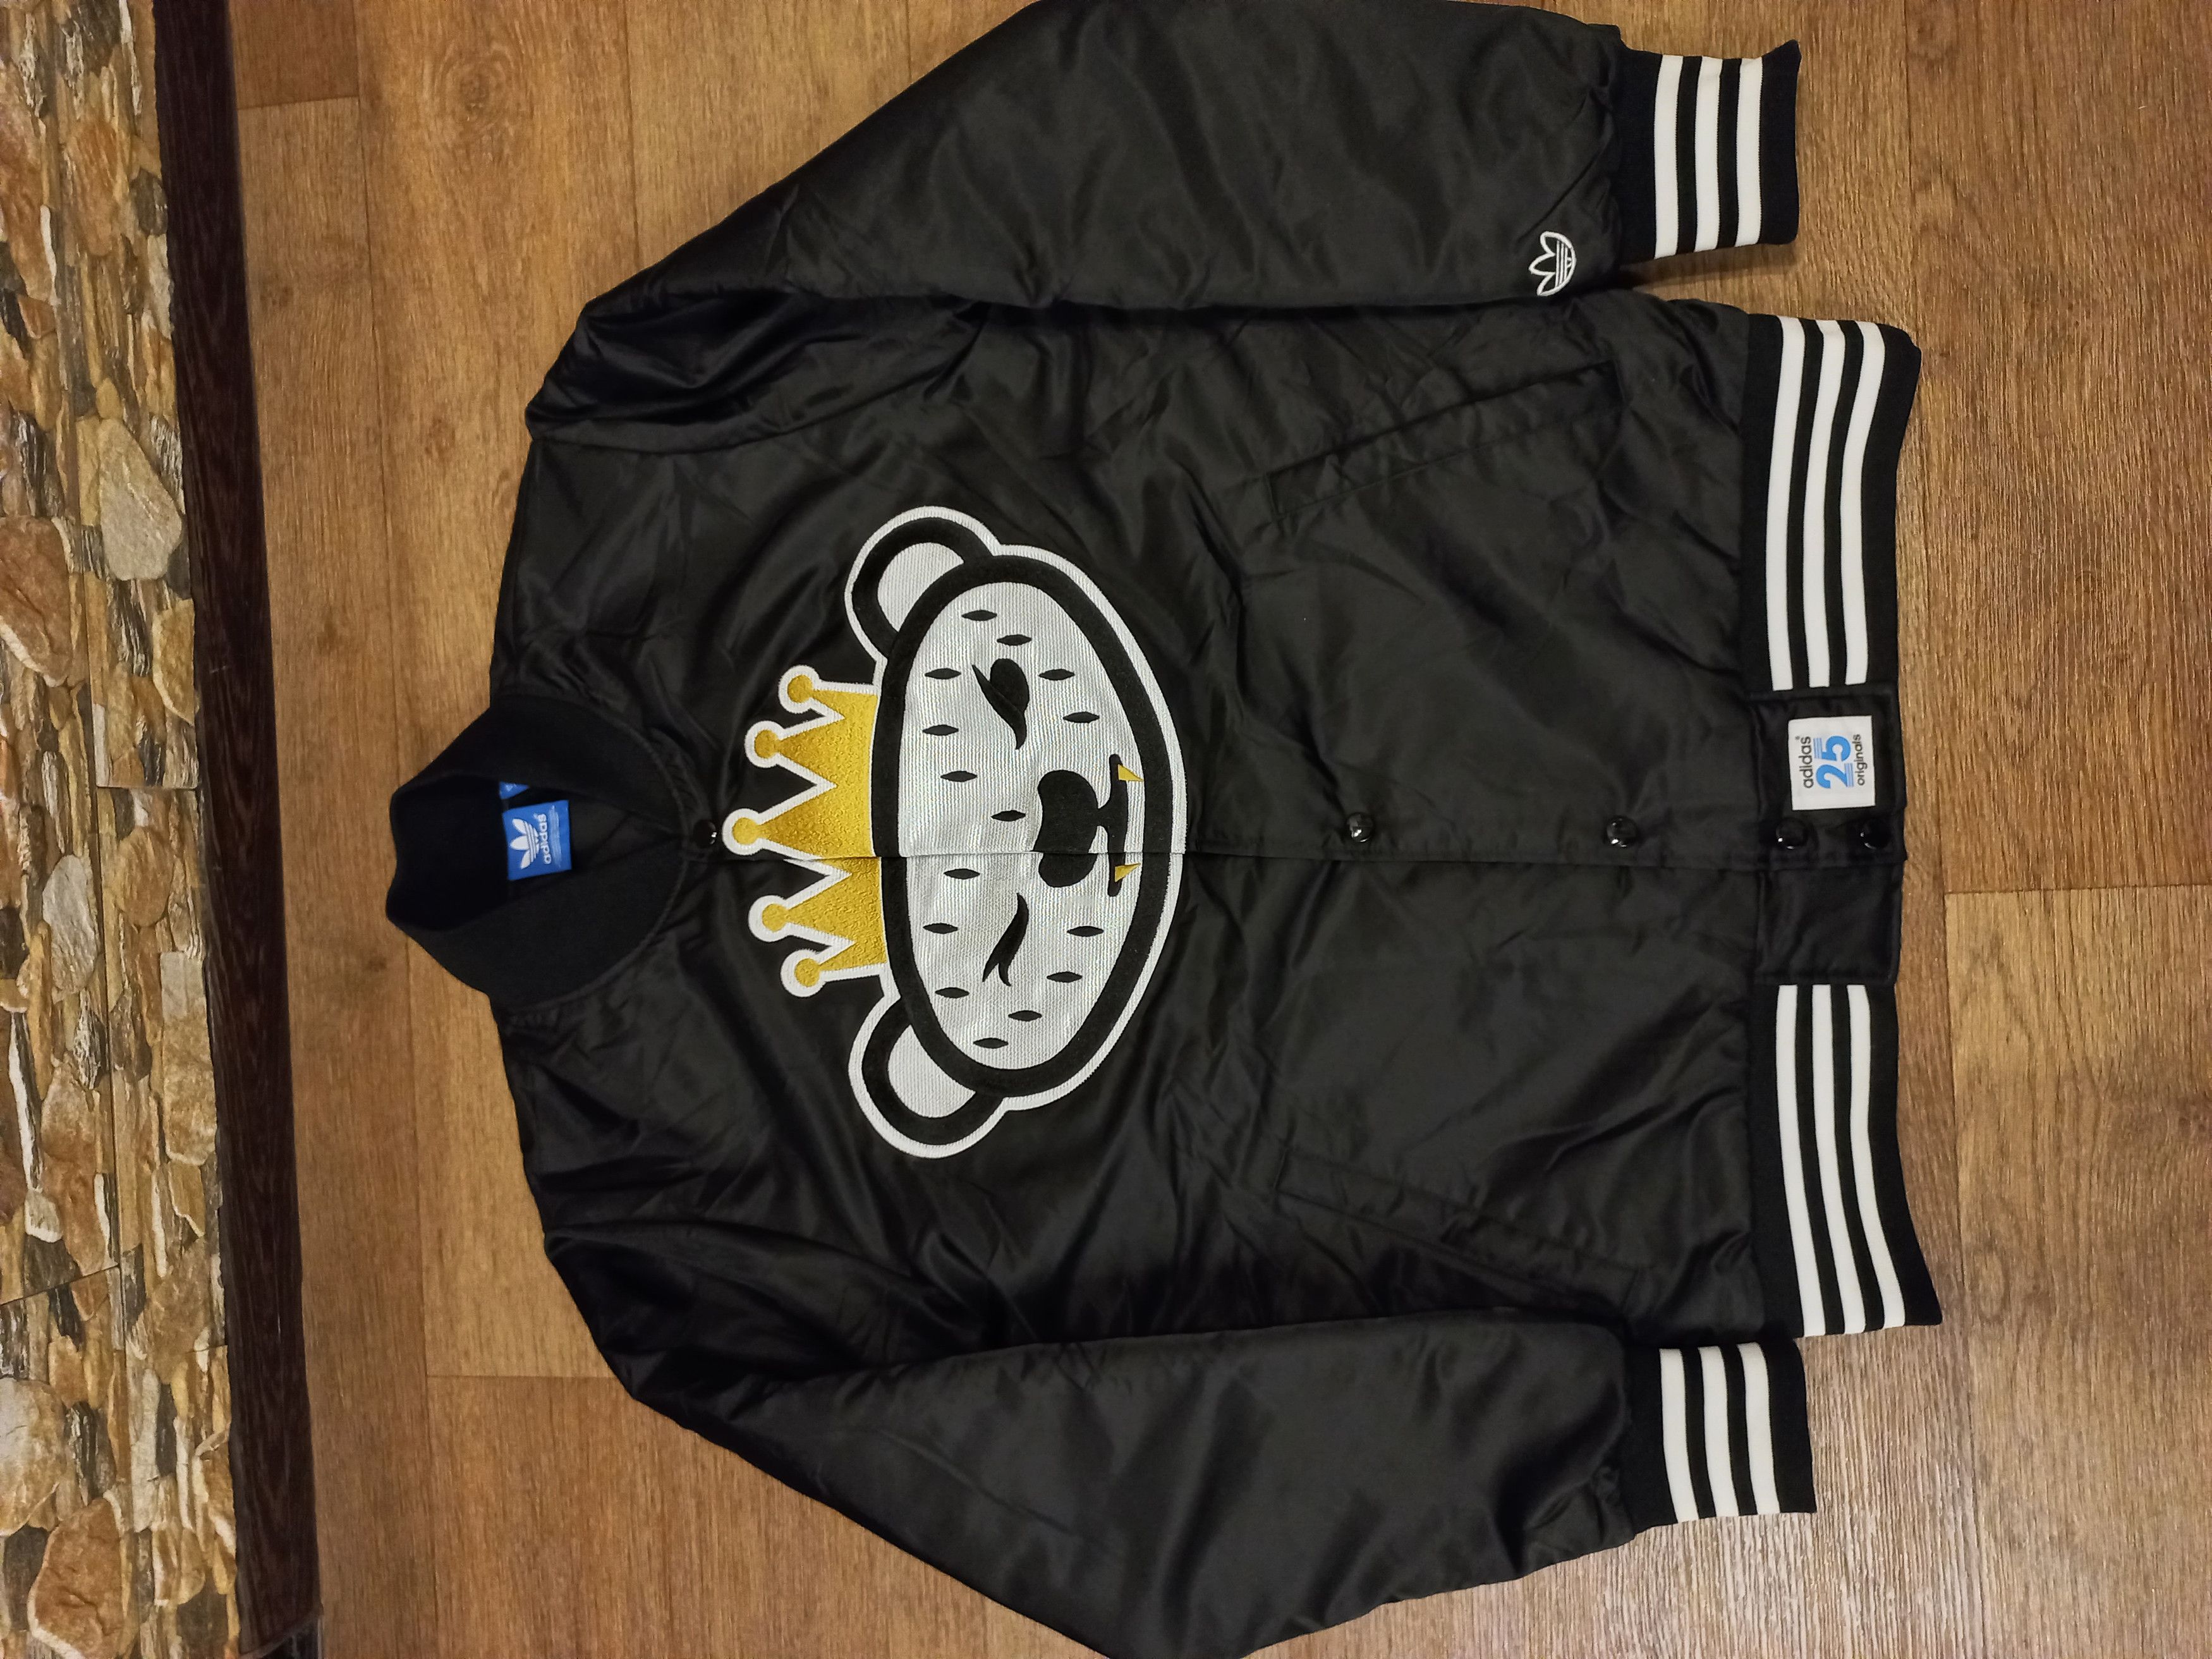 Adidas Men's Nigo Bear NYC Stadium Jacket Size Small